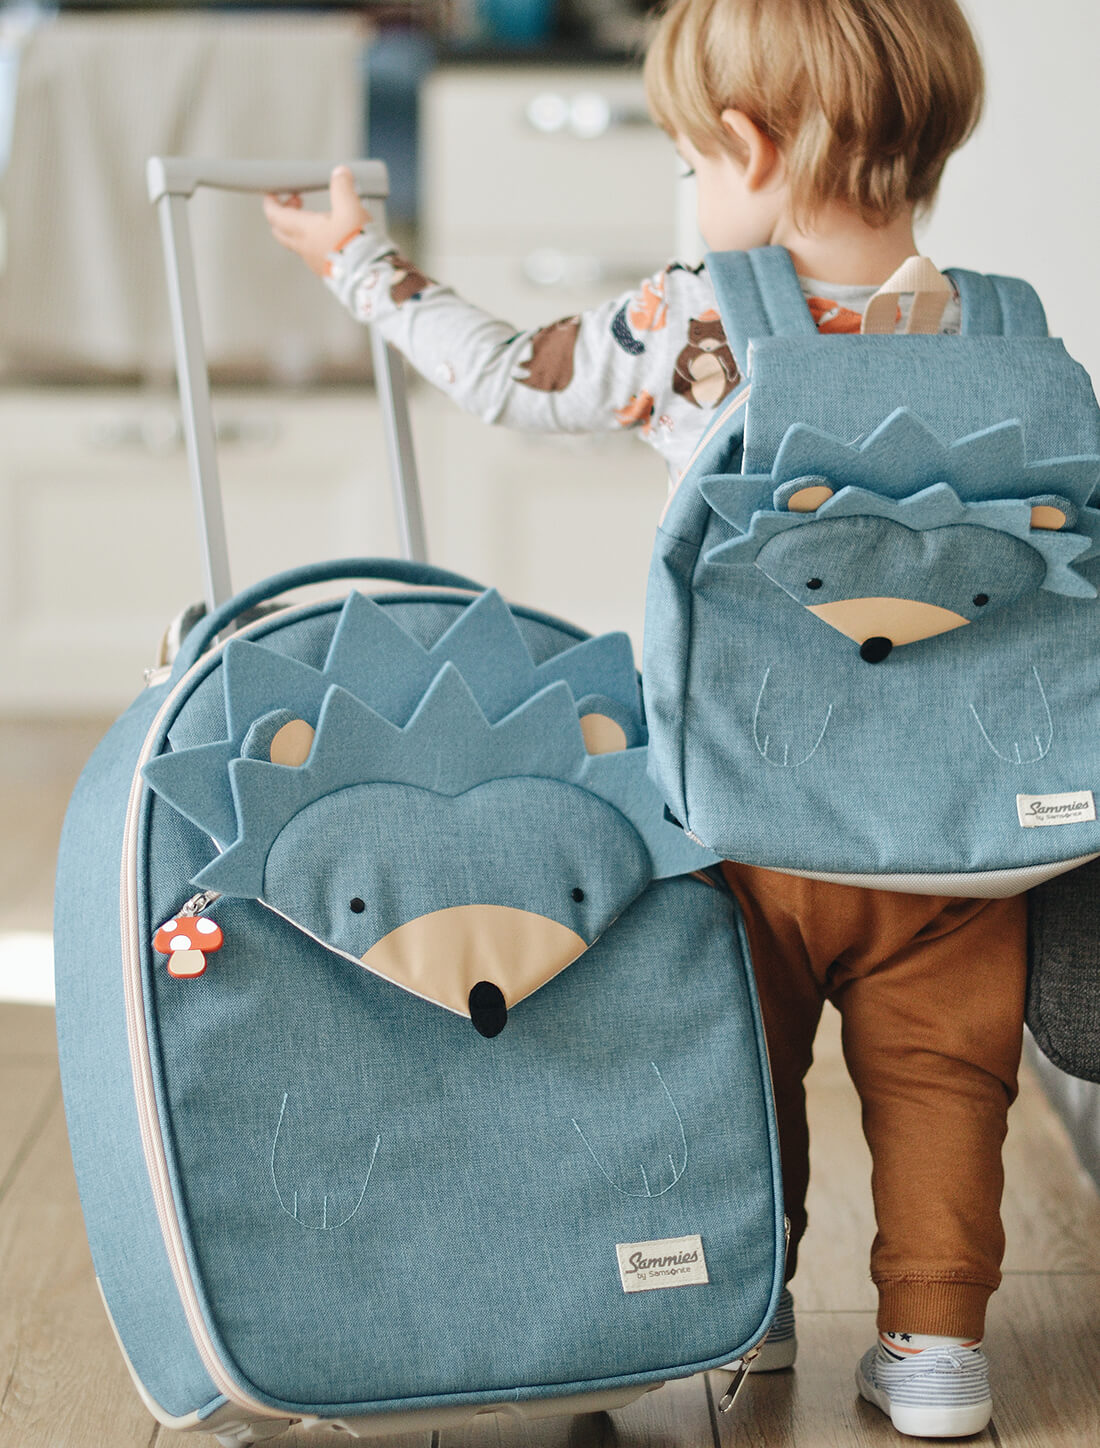 Kindergepäck & Reisegepäck für Kinder